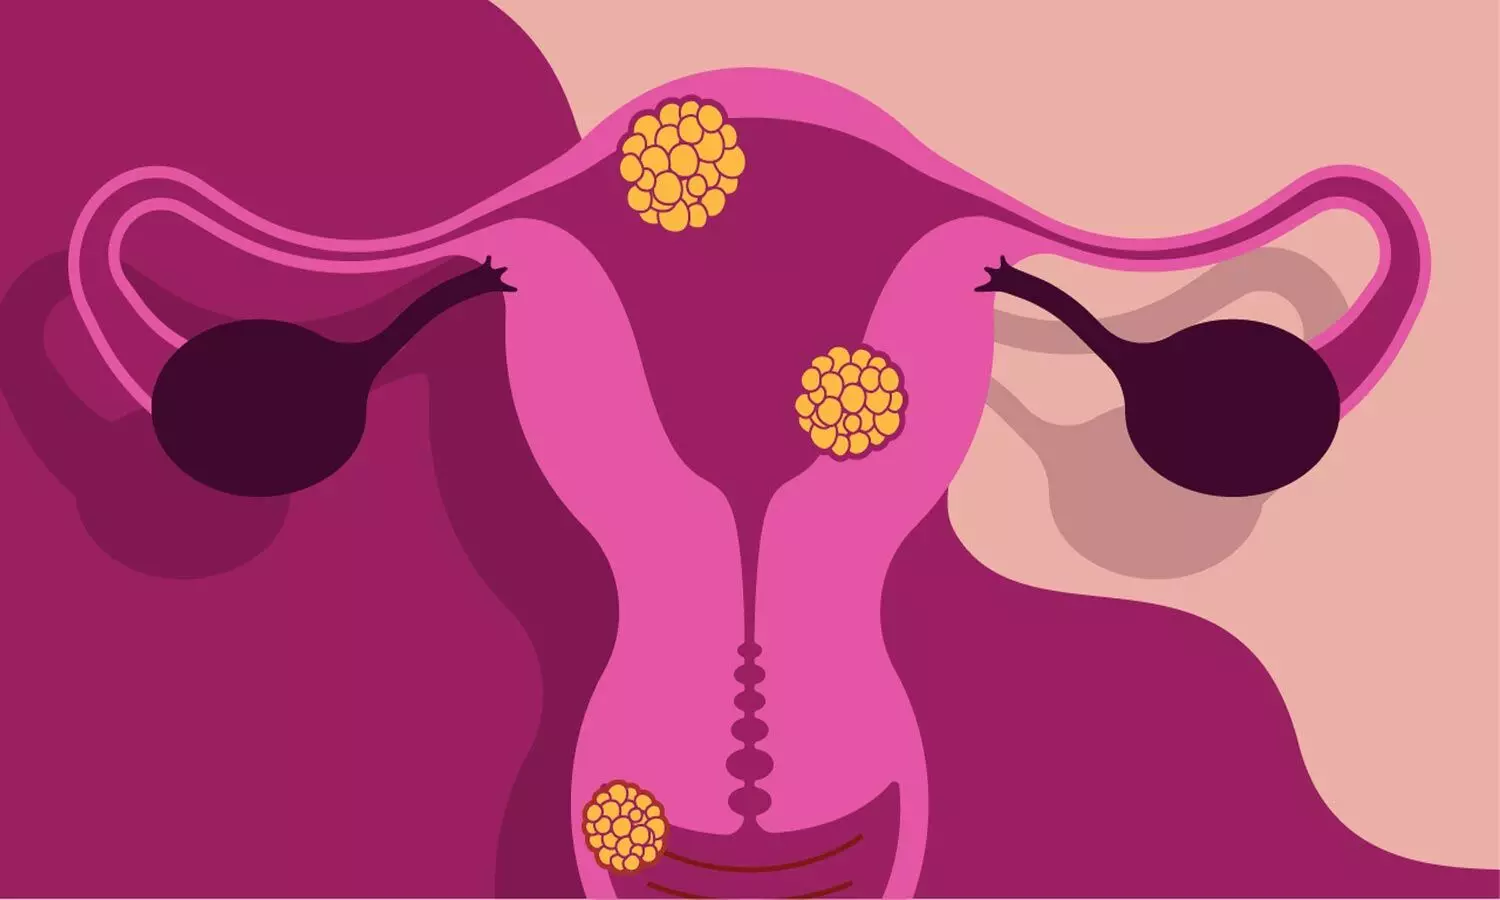 Vaginal health probiotics may help treat bacterial vaginosis